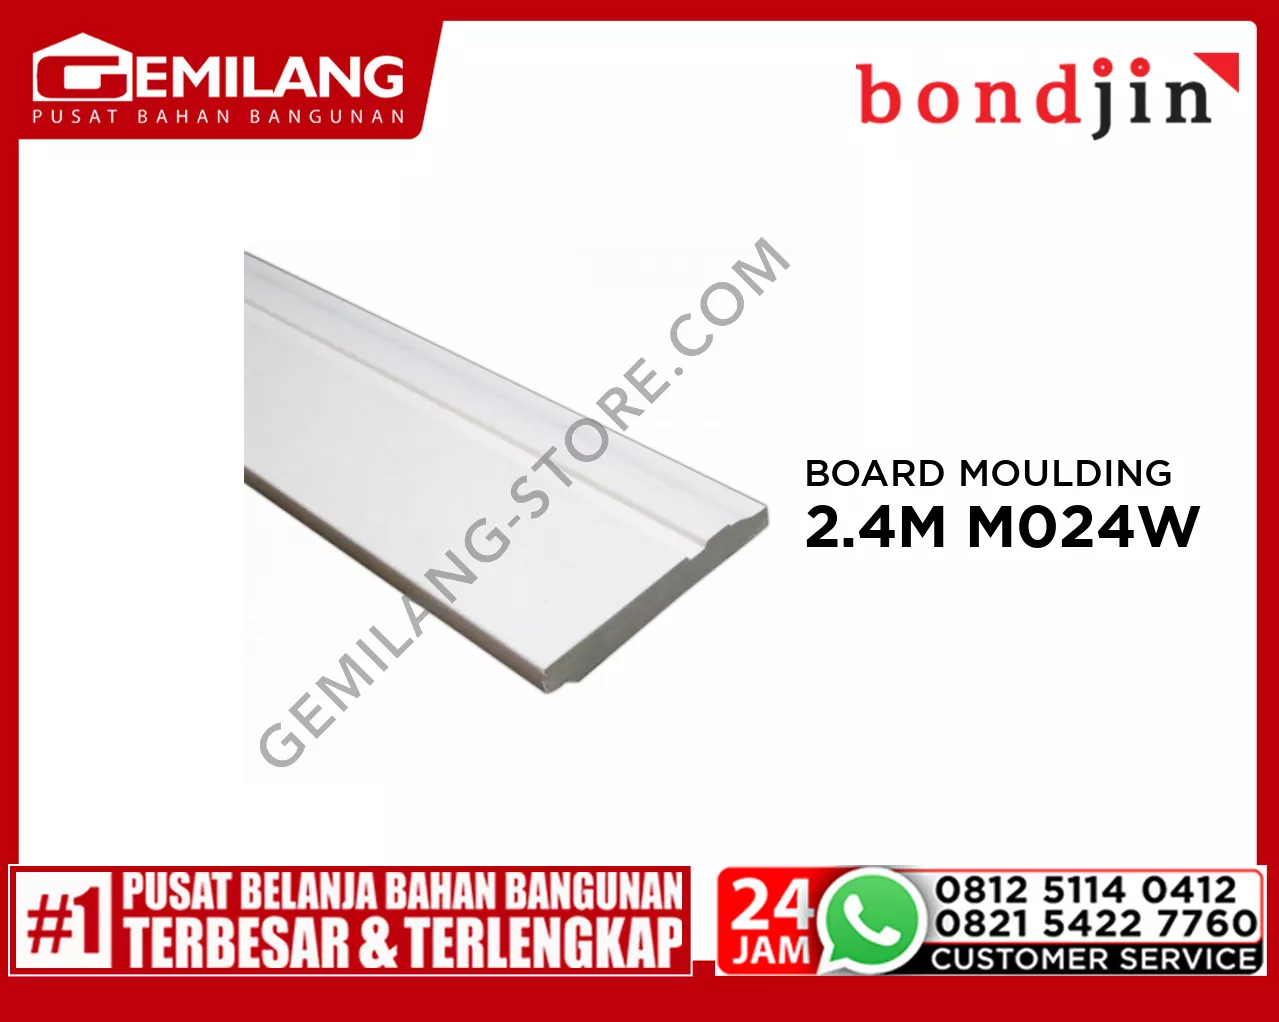 BONDJIN BOARD MOULDING 2.4M M024-W